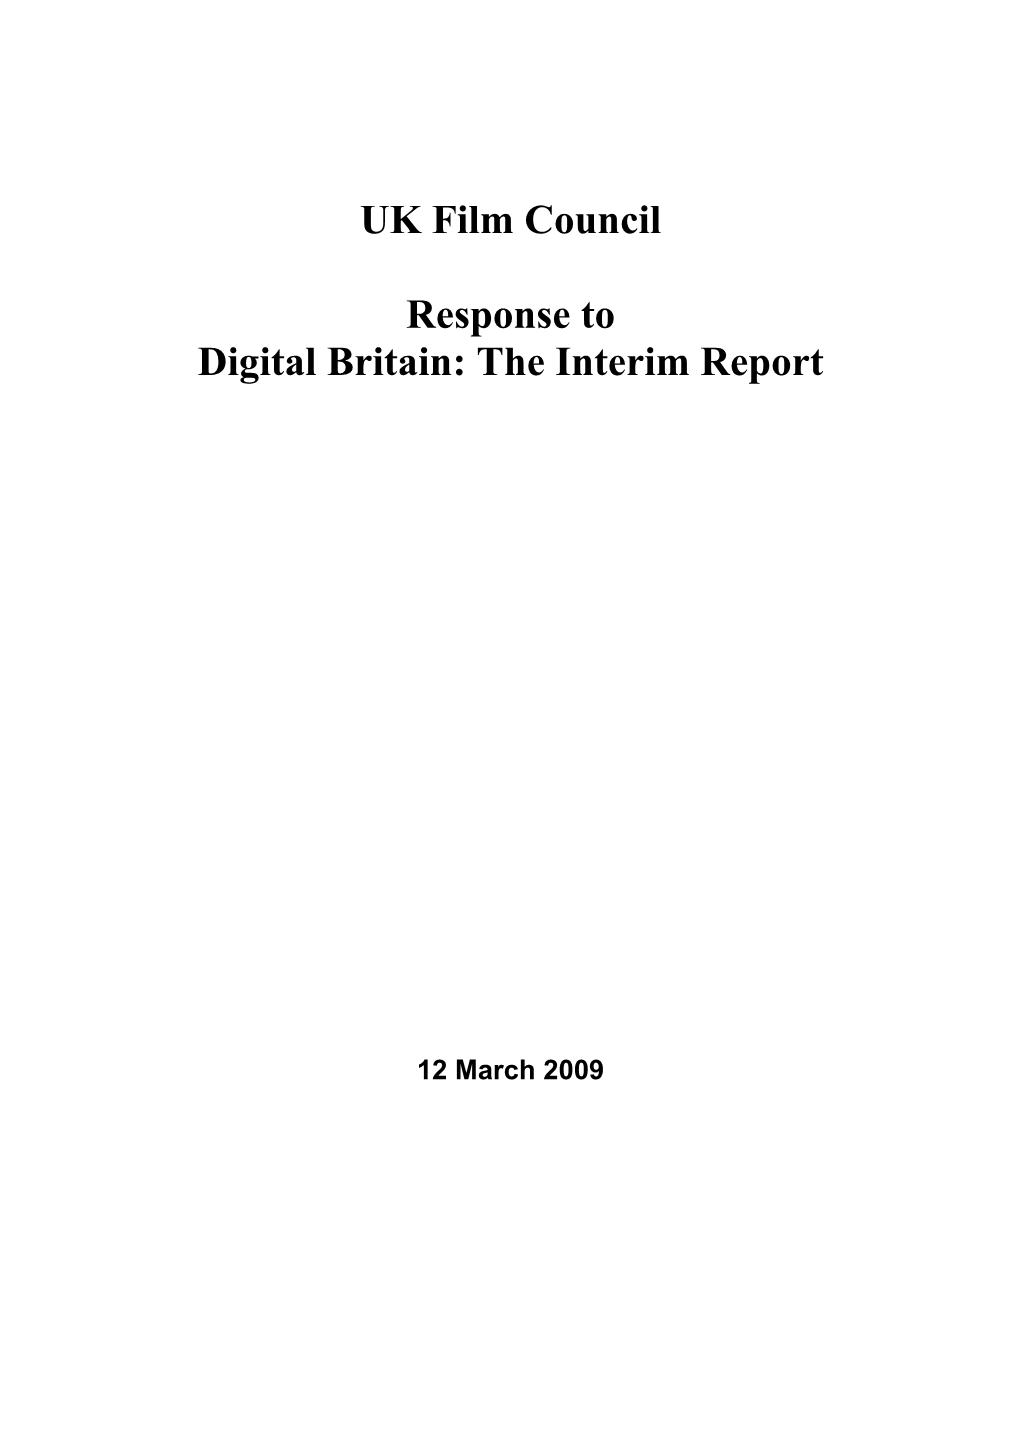 UK Film Council Response to Digital Britain: the Interim Report